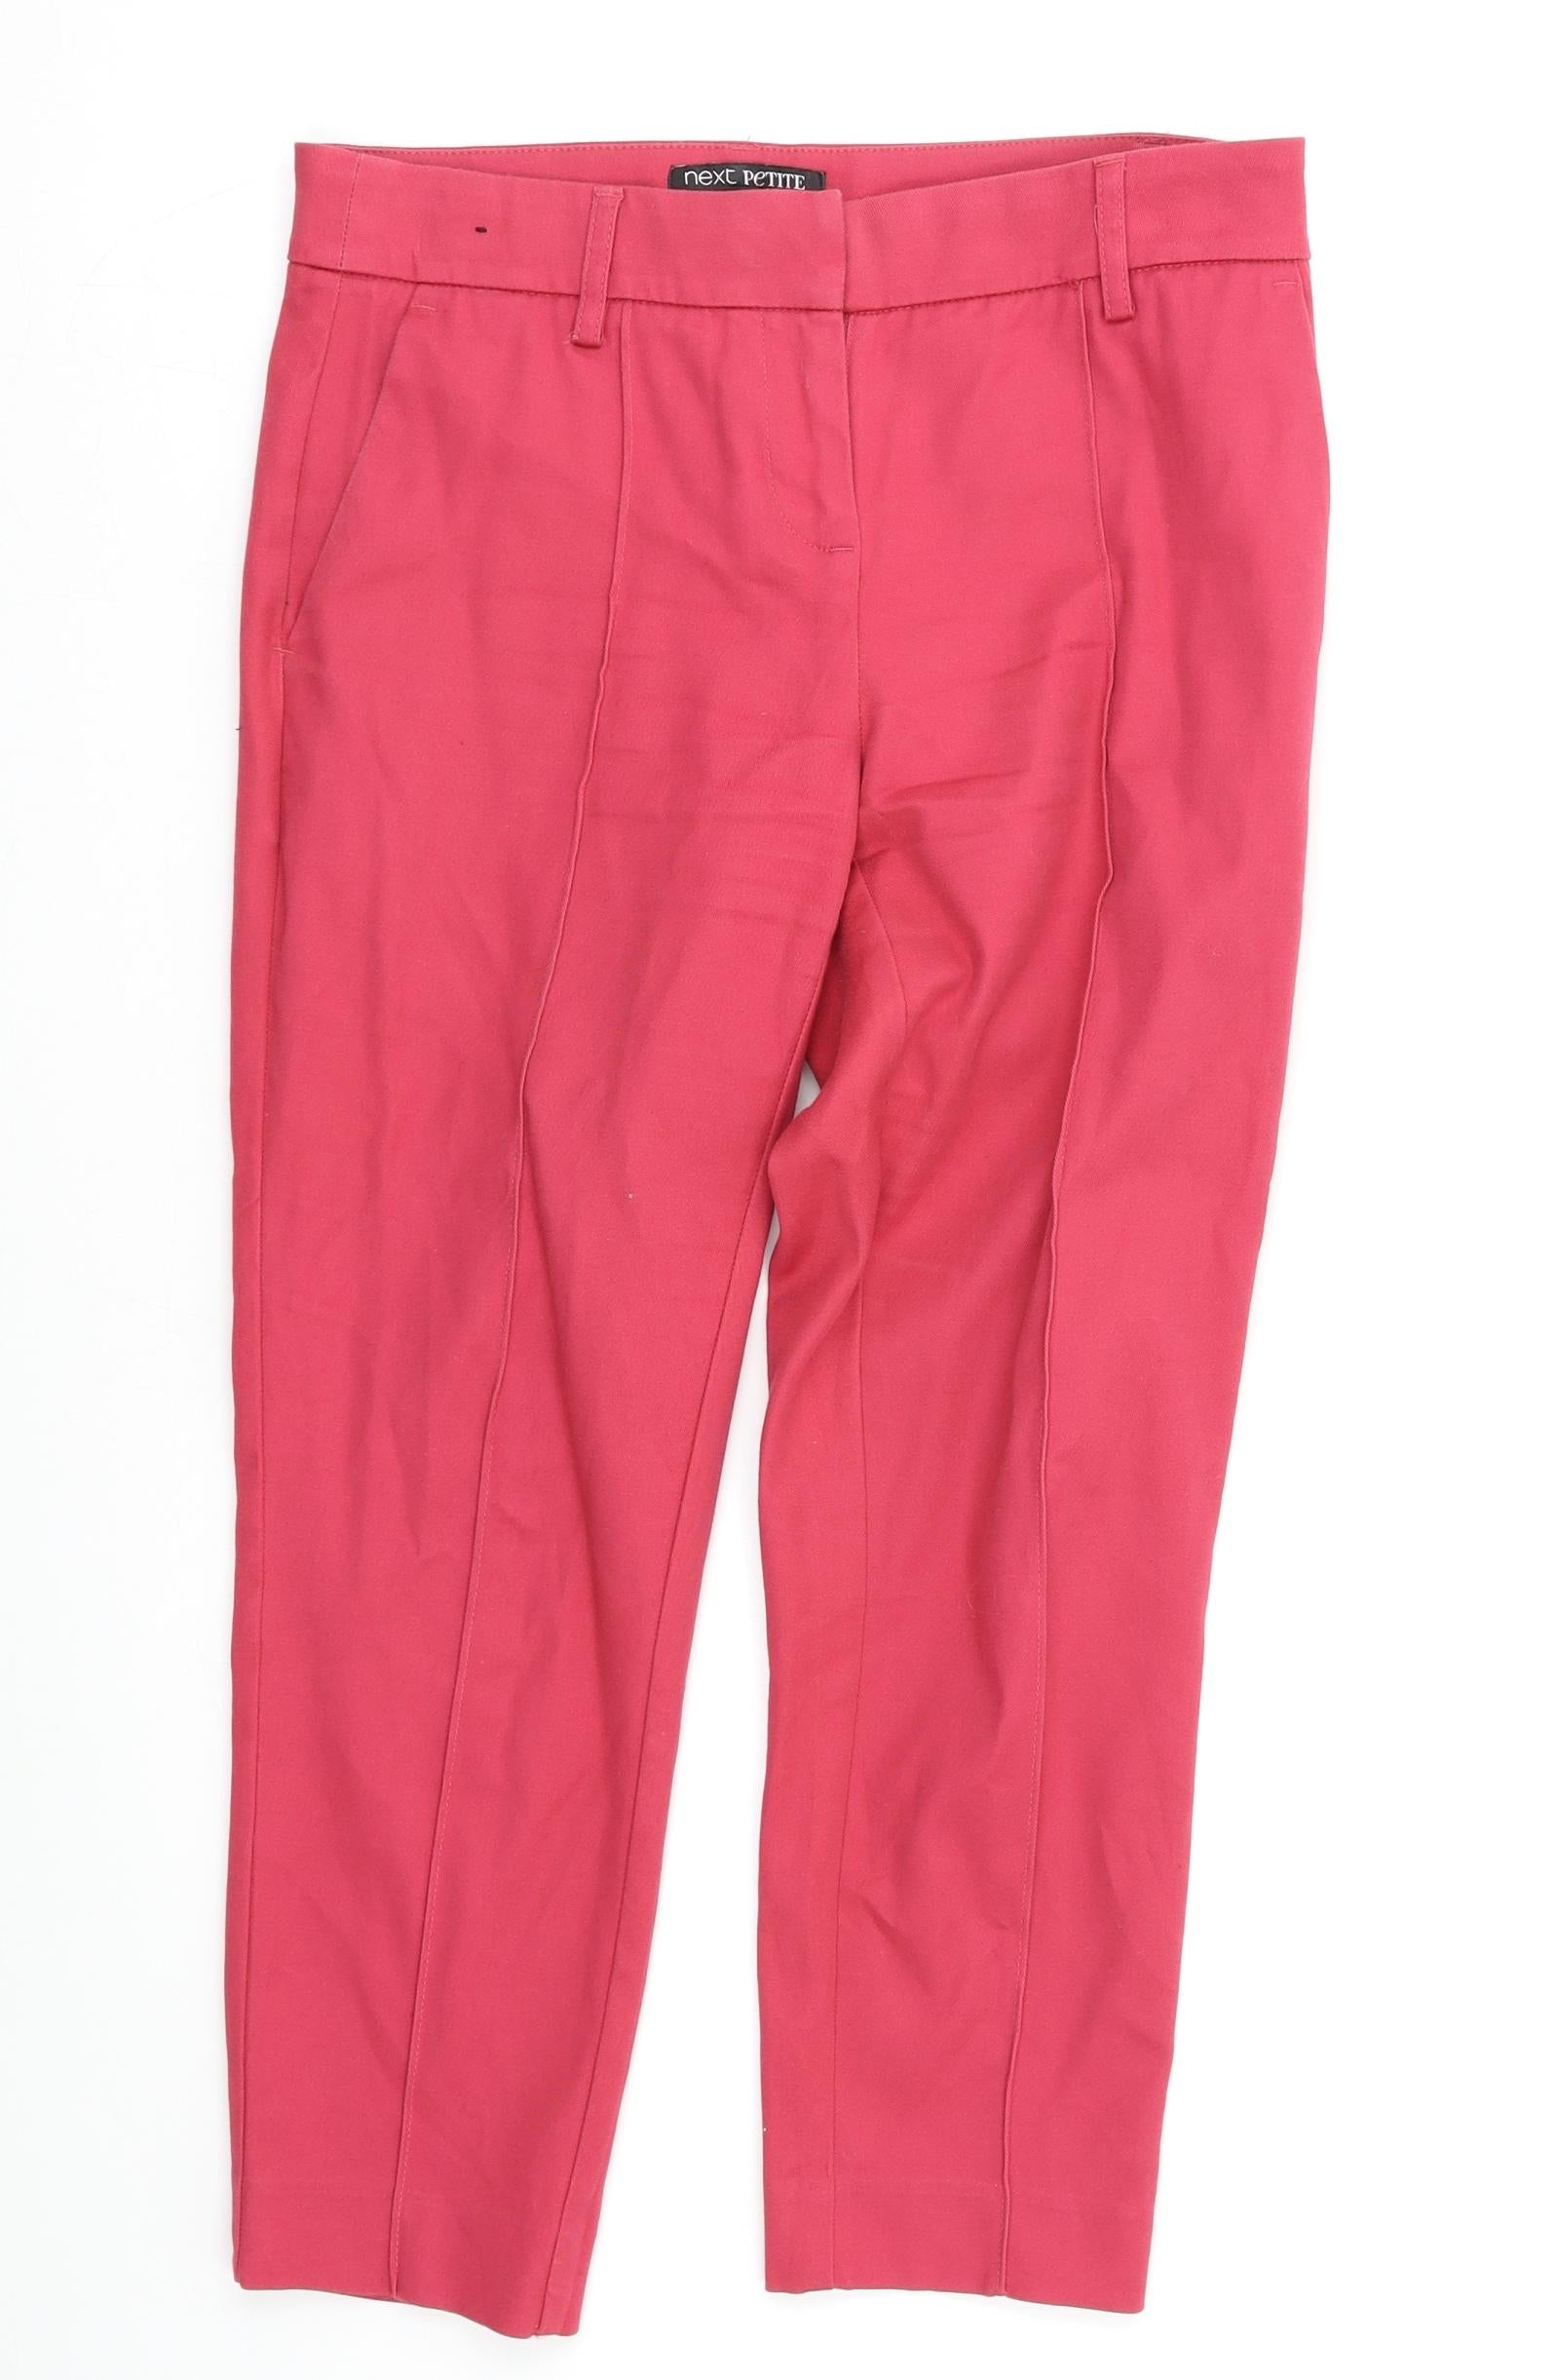 NEXT Womens Pink Capri Trousers Size 6 L22 in Rewards  Monetha